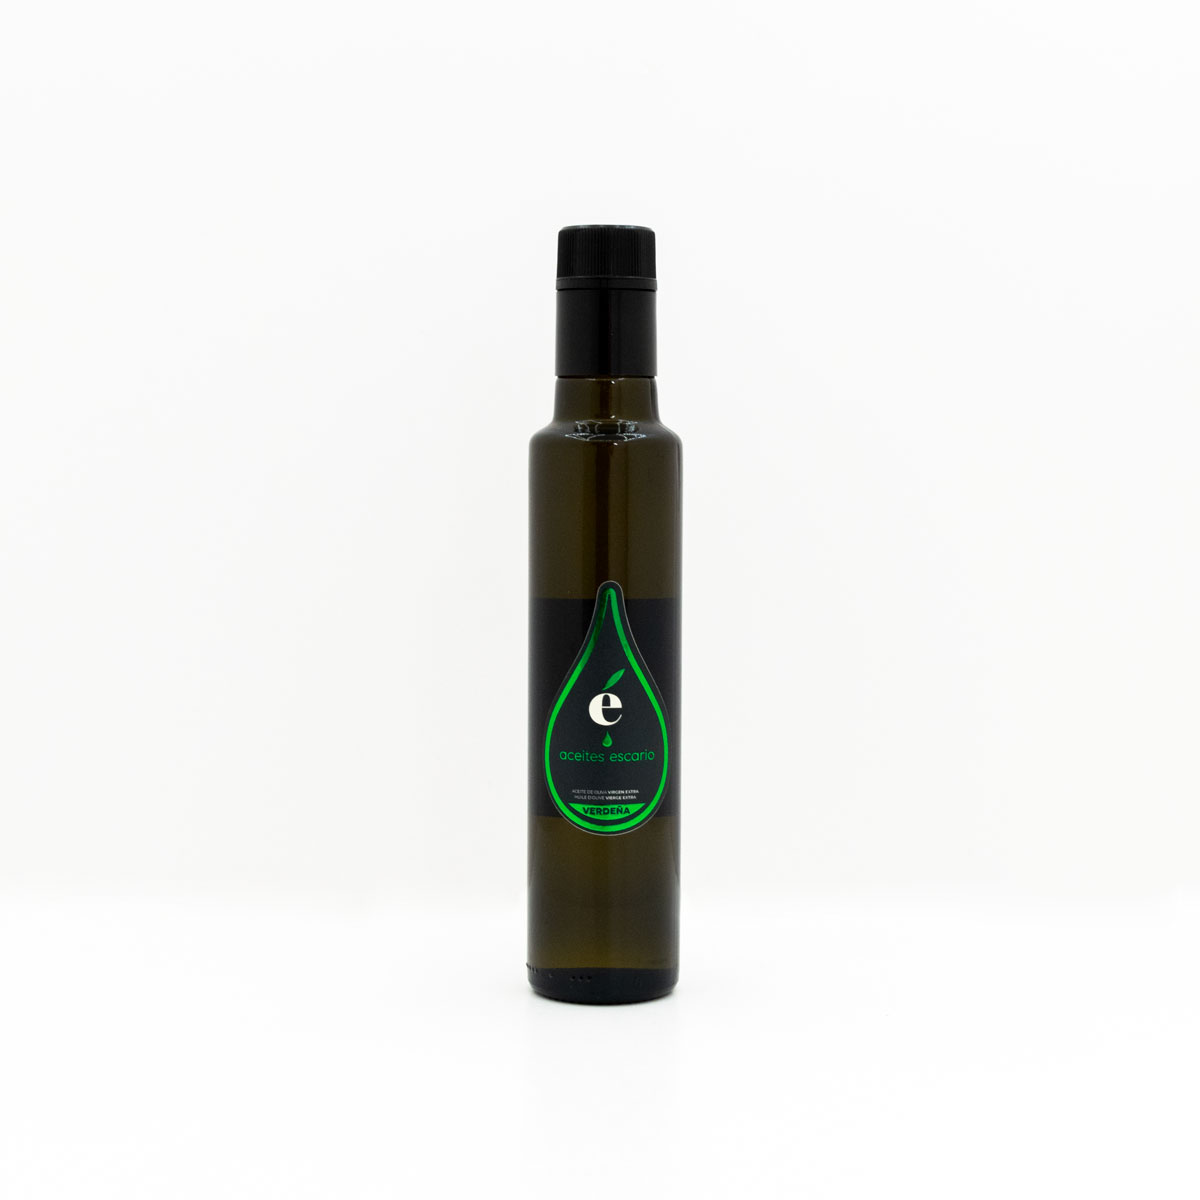 Botella de Aceites Escario monovarietal verdeña en tamaño de 250ml